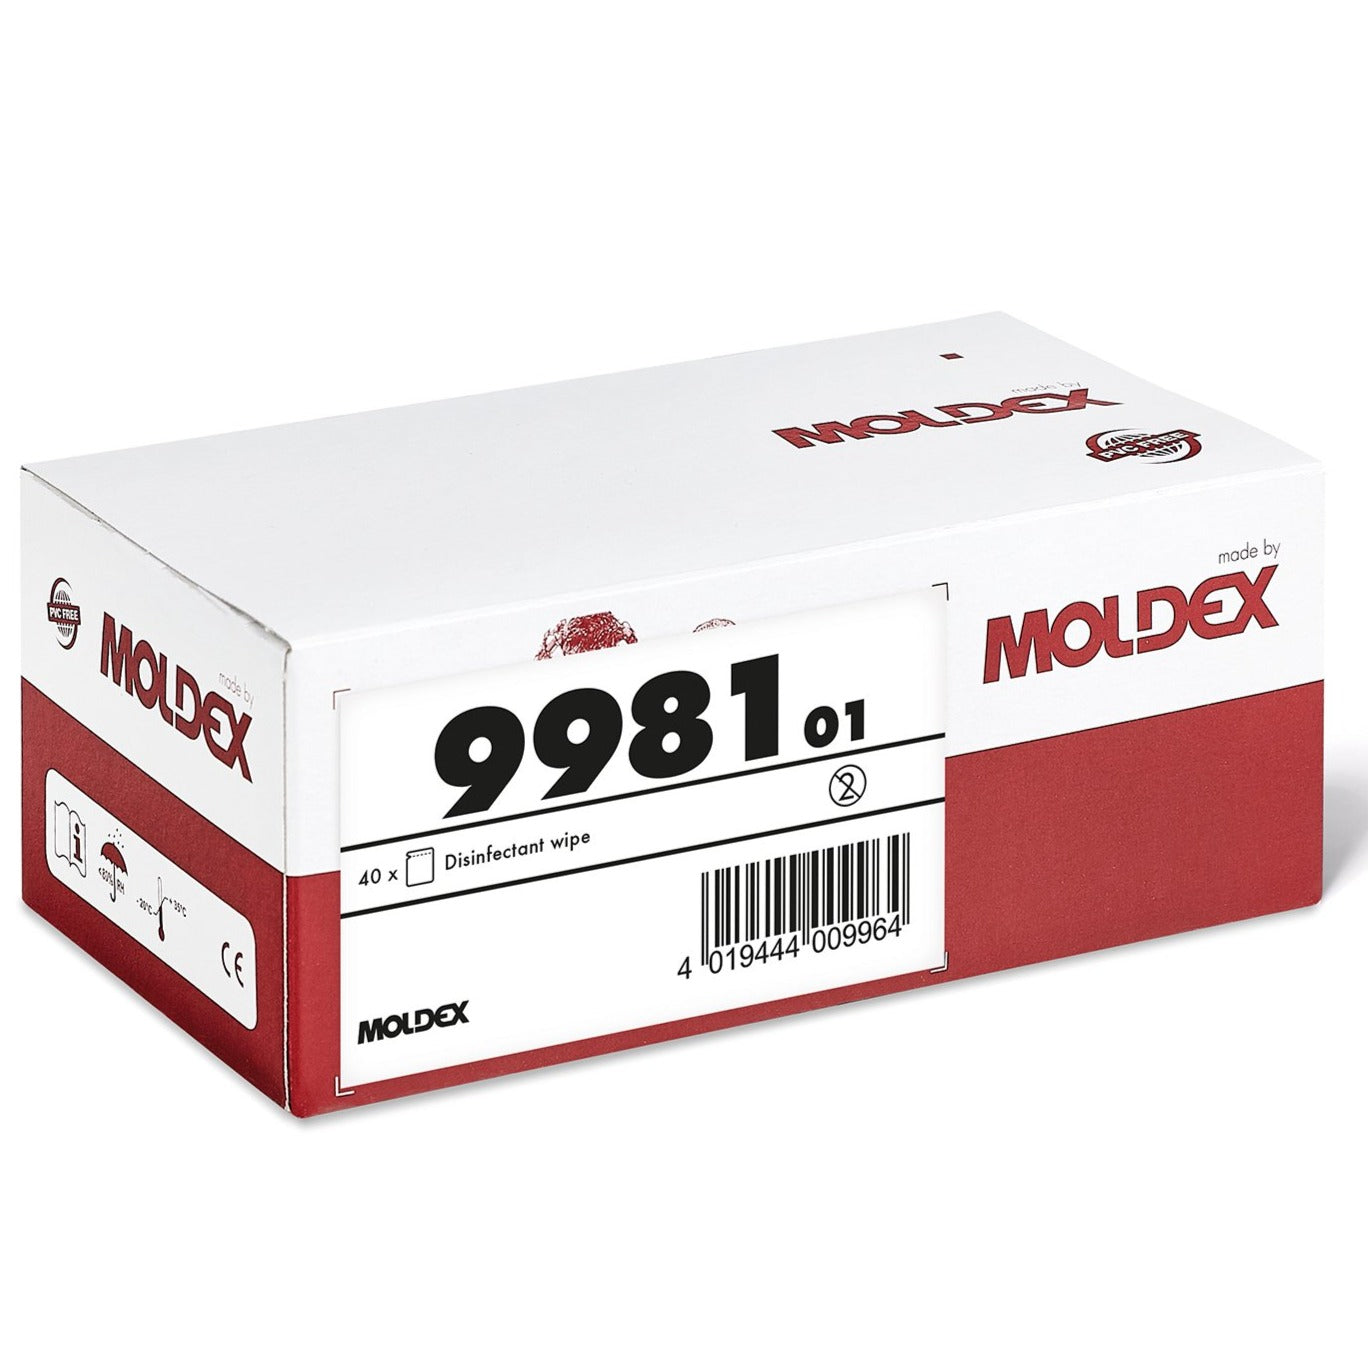 MOLDEX 9981 disinfectant wipes box